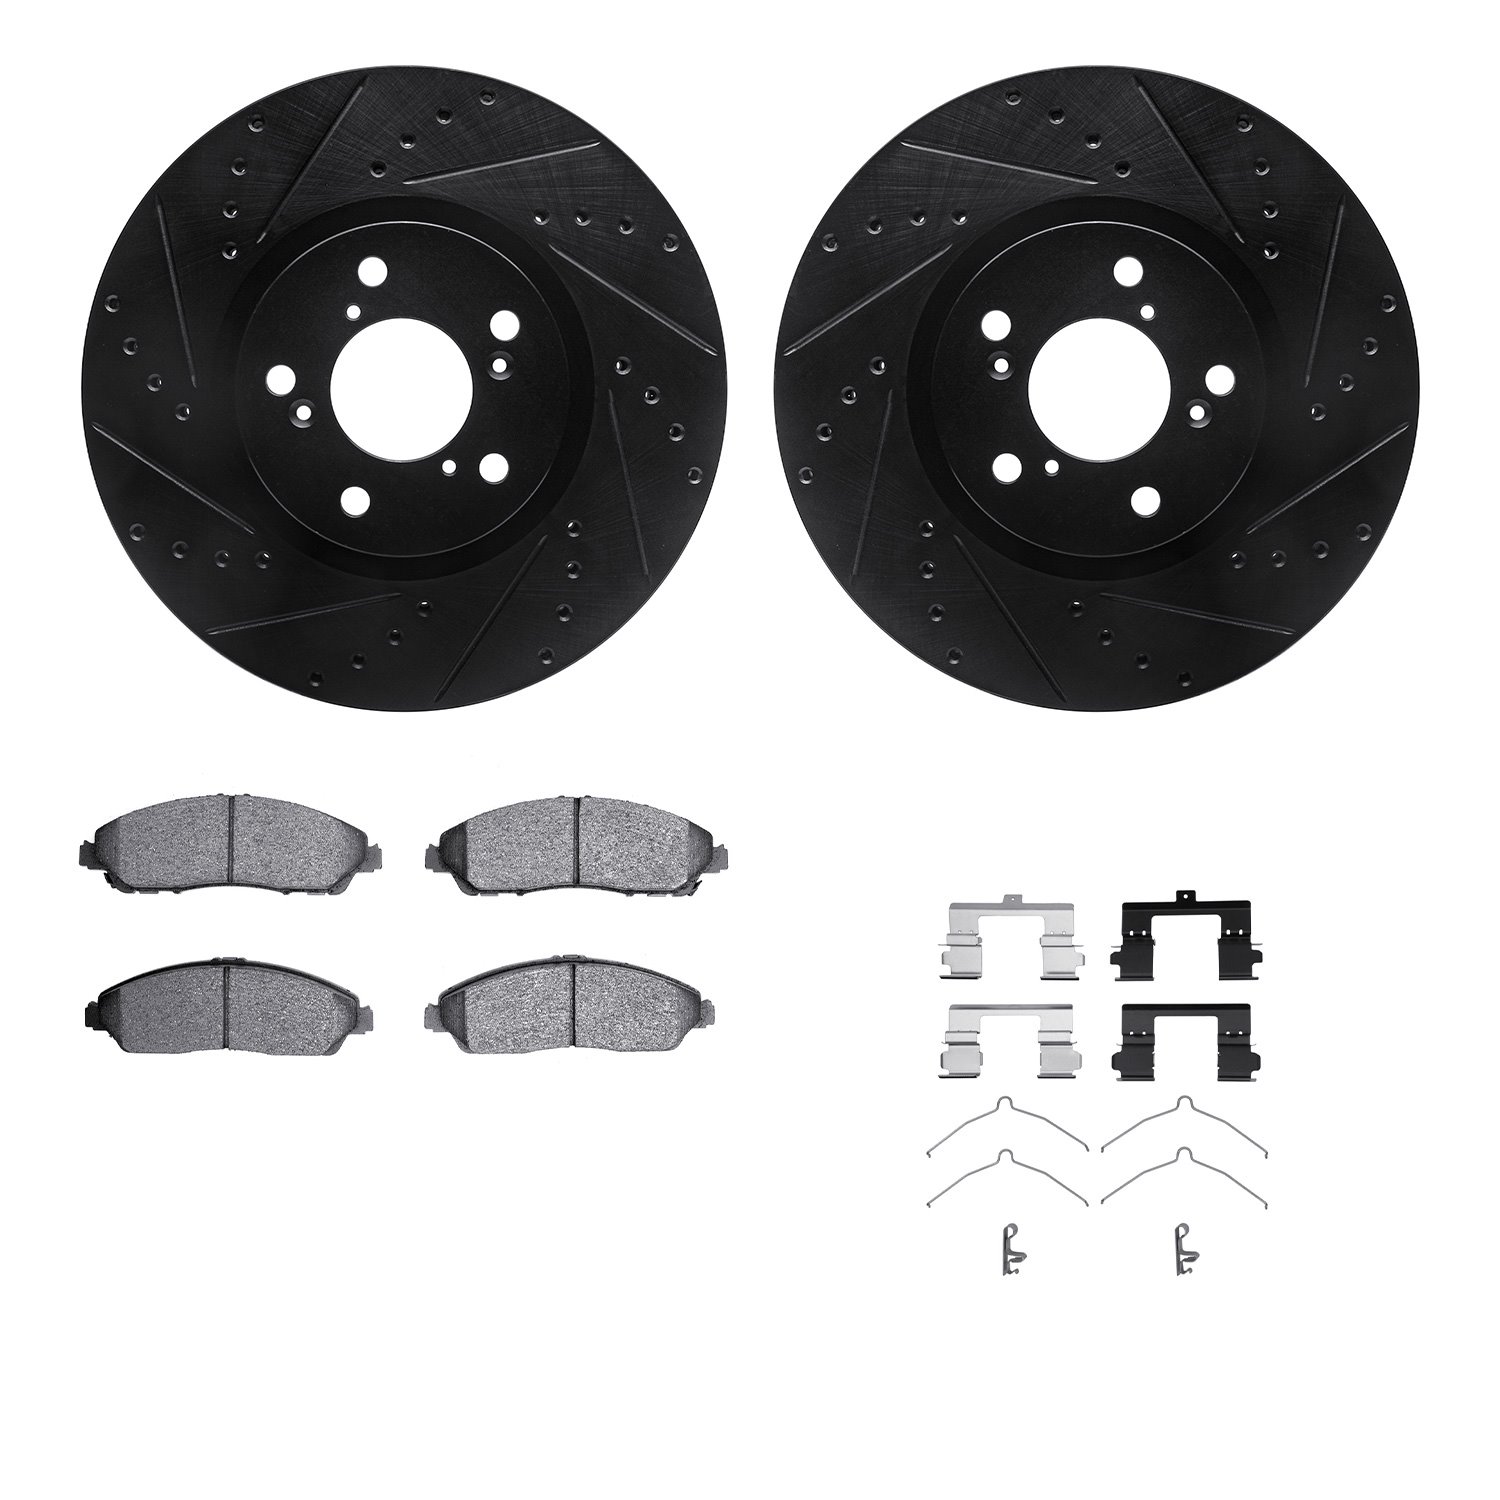 8312-59100 Drilled/Slotted Brake Rotors with 3000-Series Ceramic Brake Pads Kit & Hardware [Black], 2007-2020 Acura/Honda, Posit